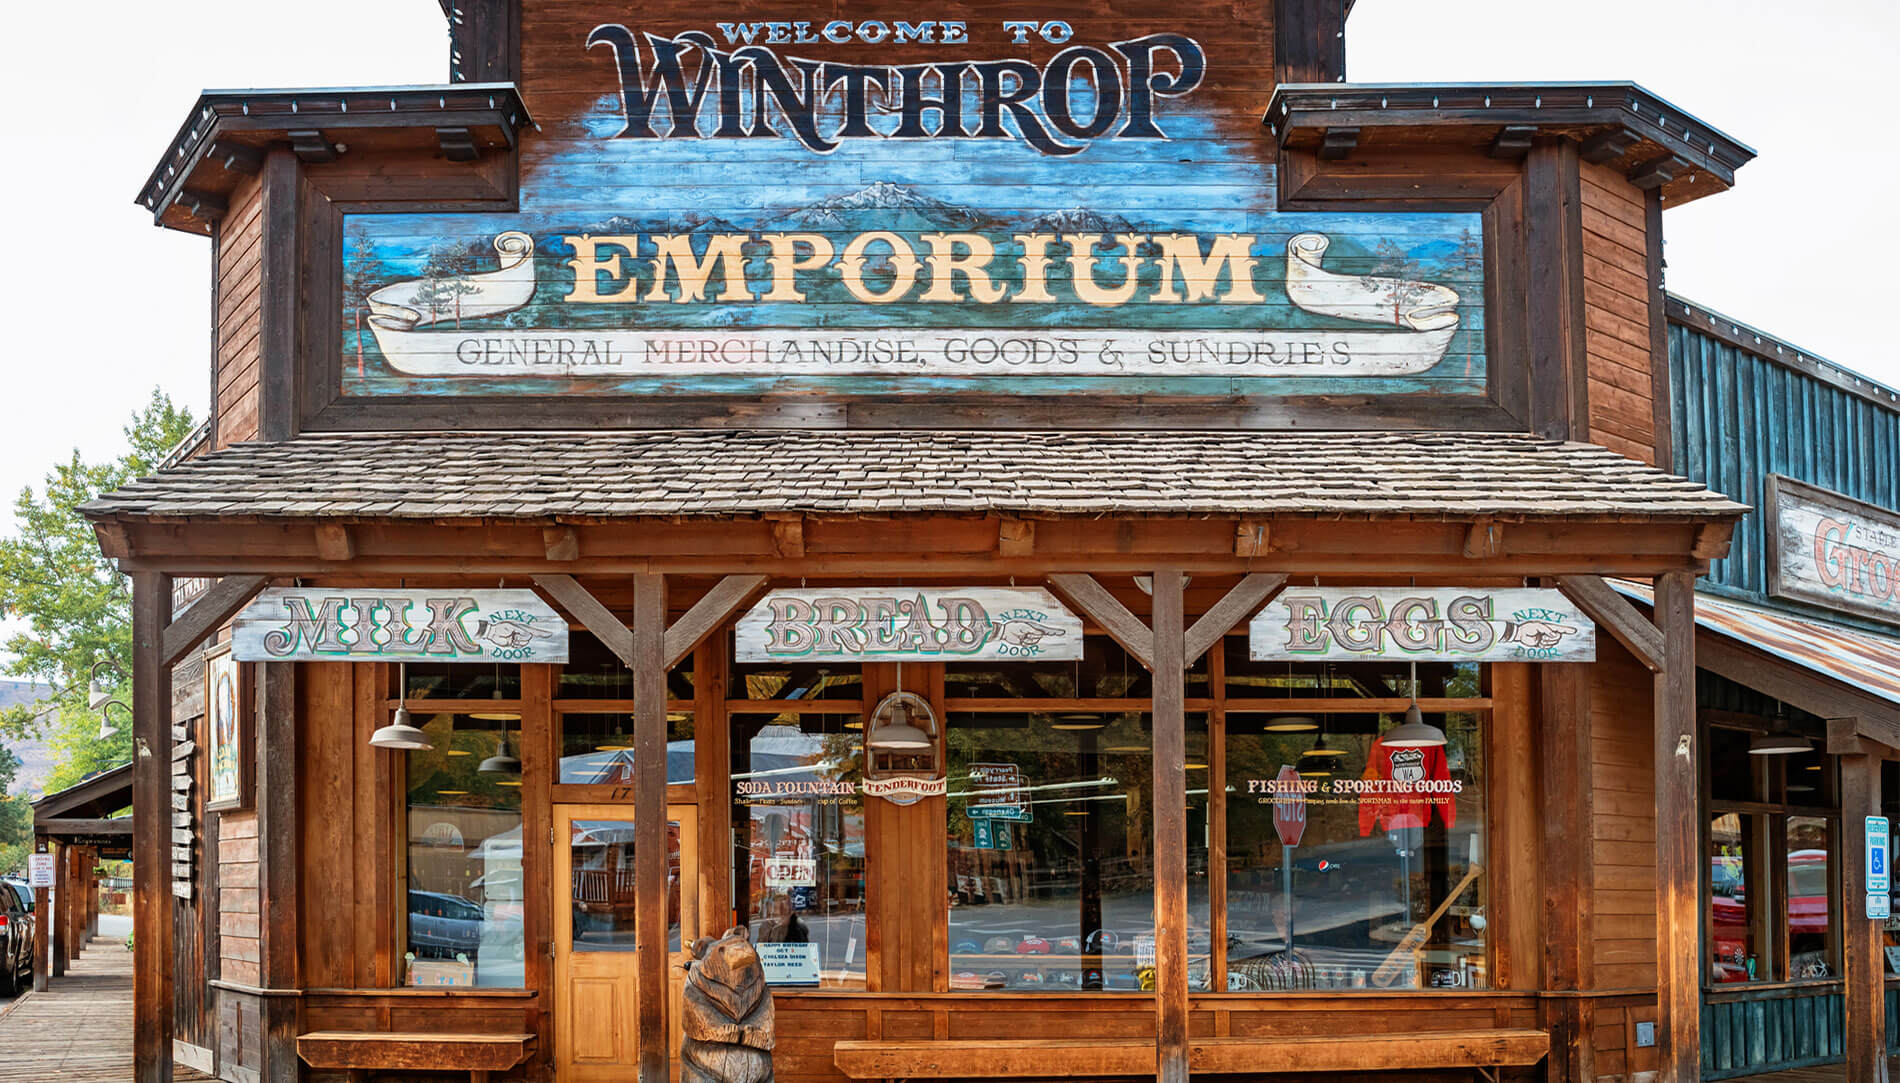 The Winthrop Emporium in downtown Winthrop, Washington